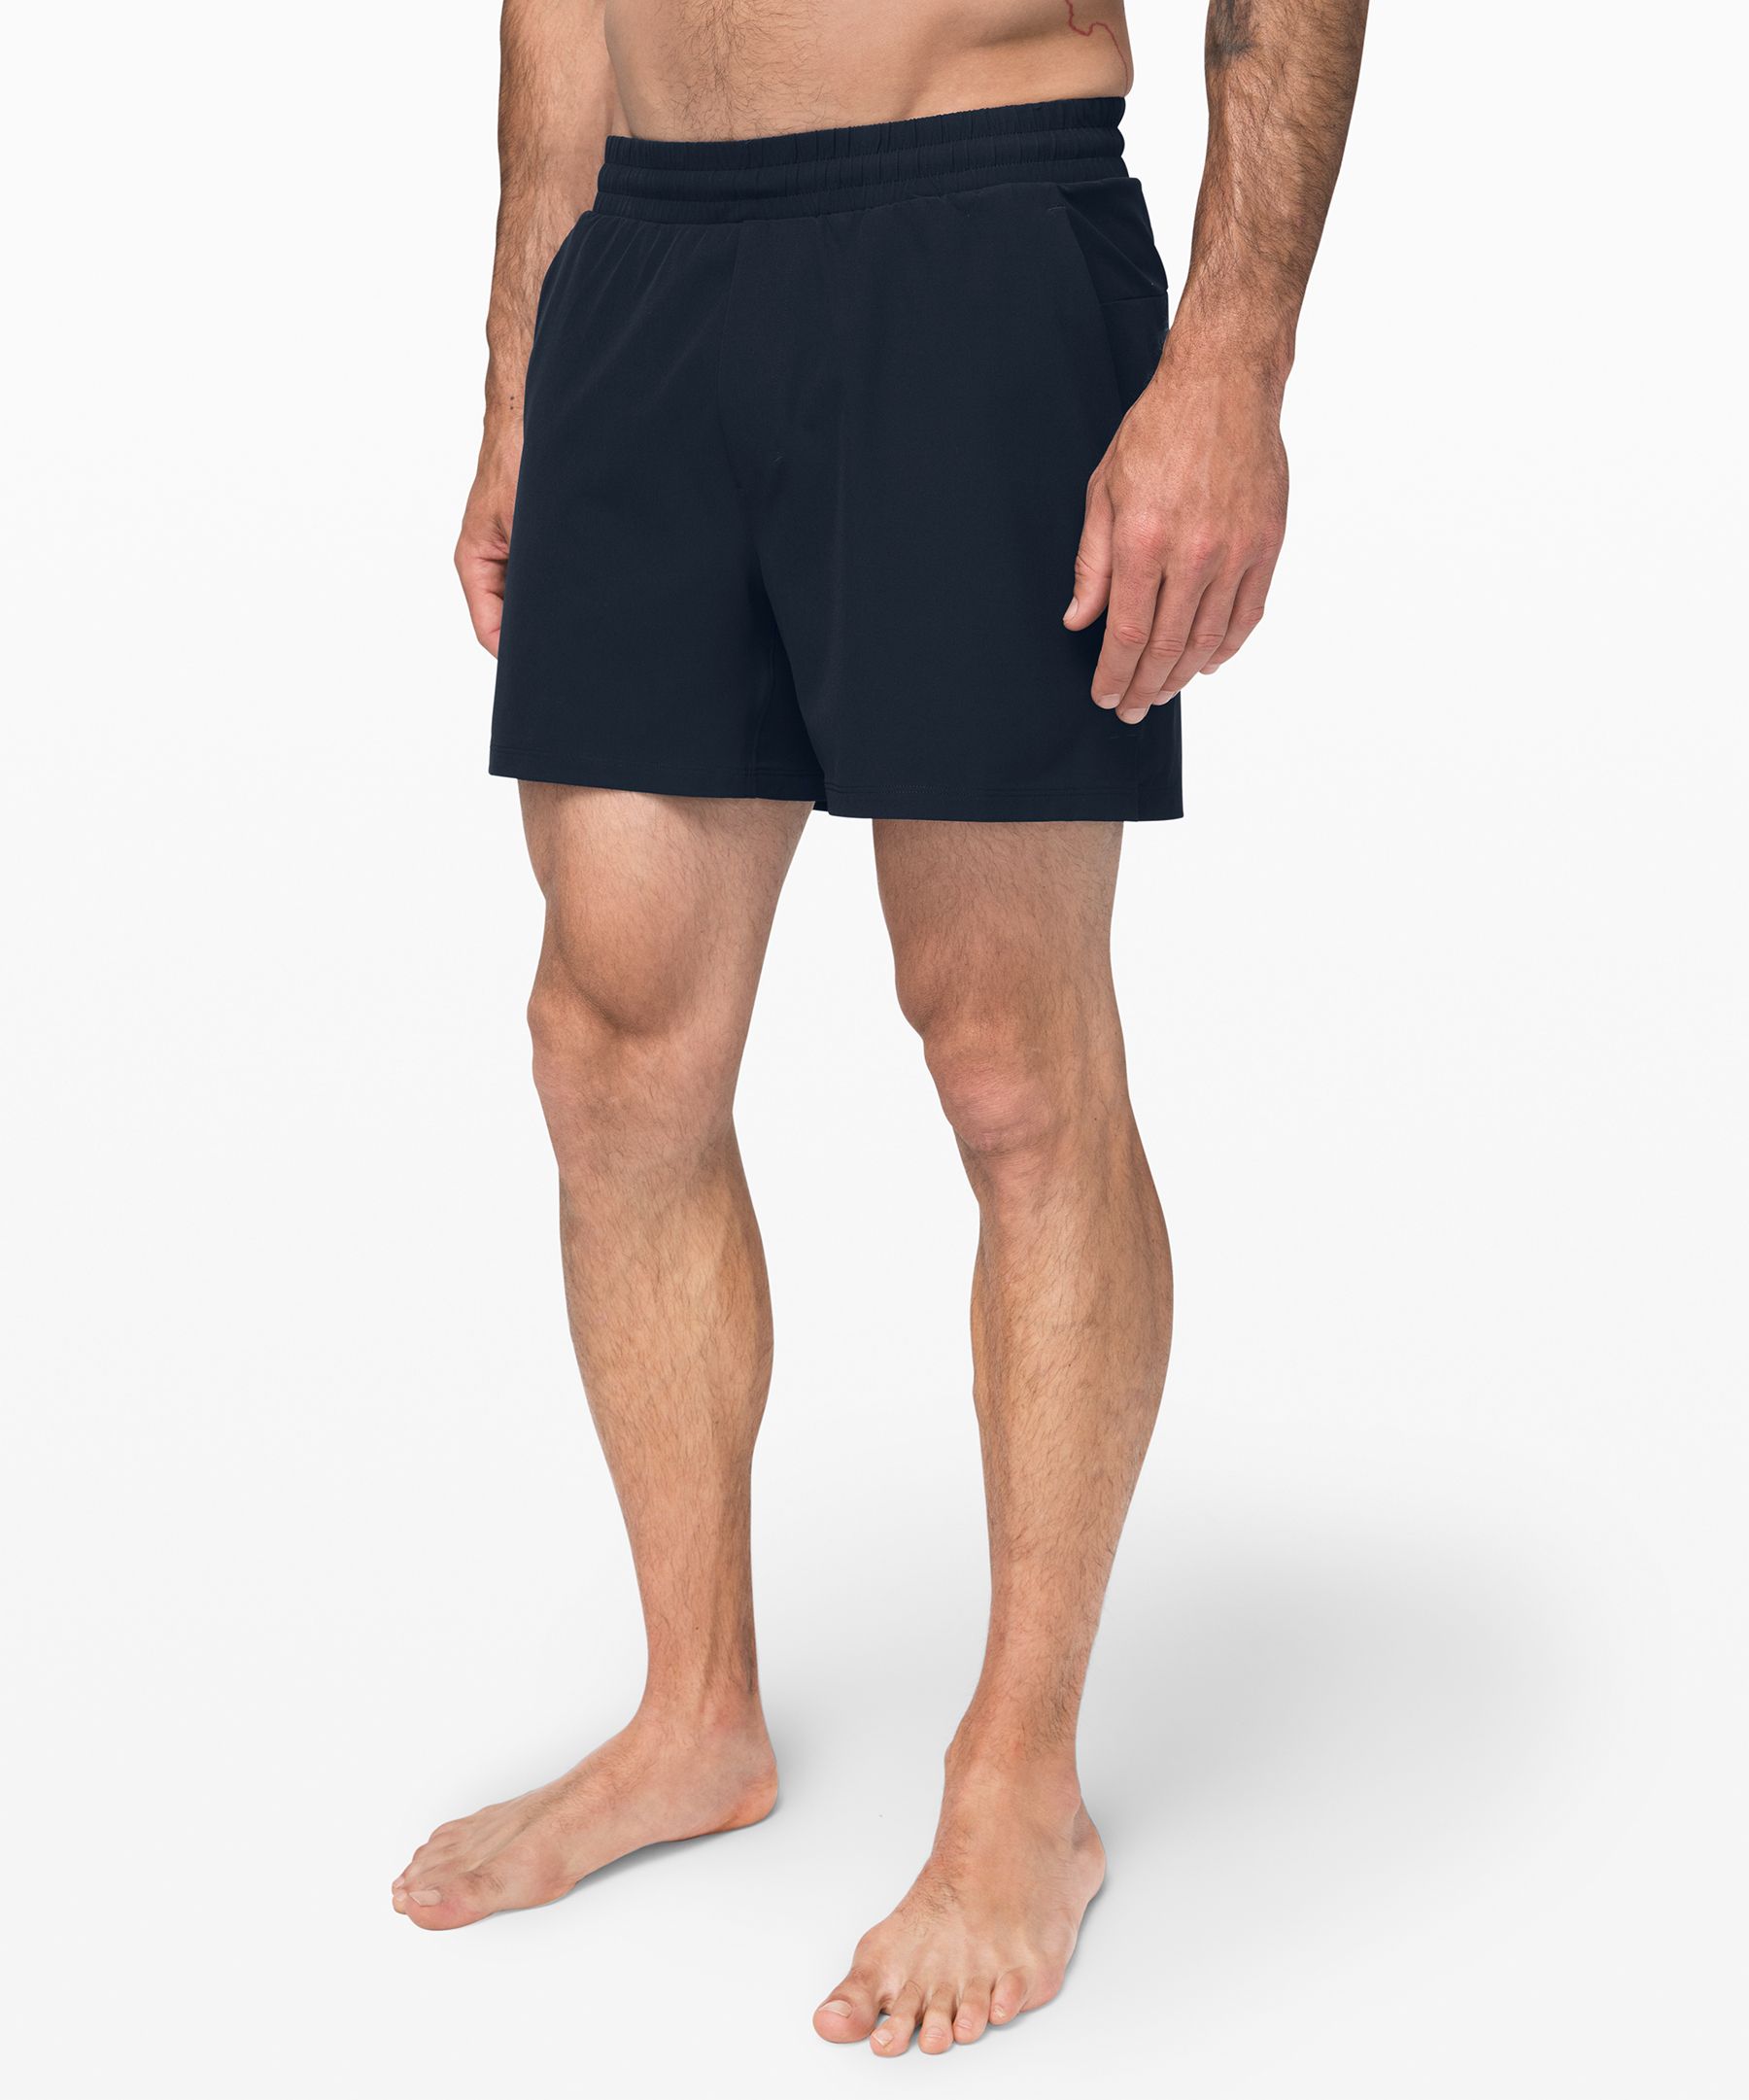 mens lululemon swim shorts